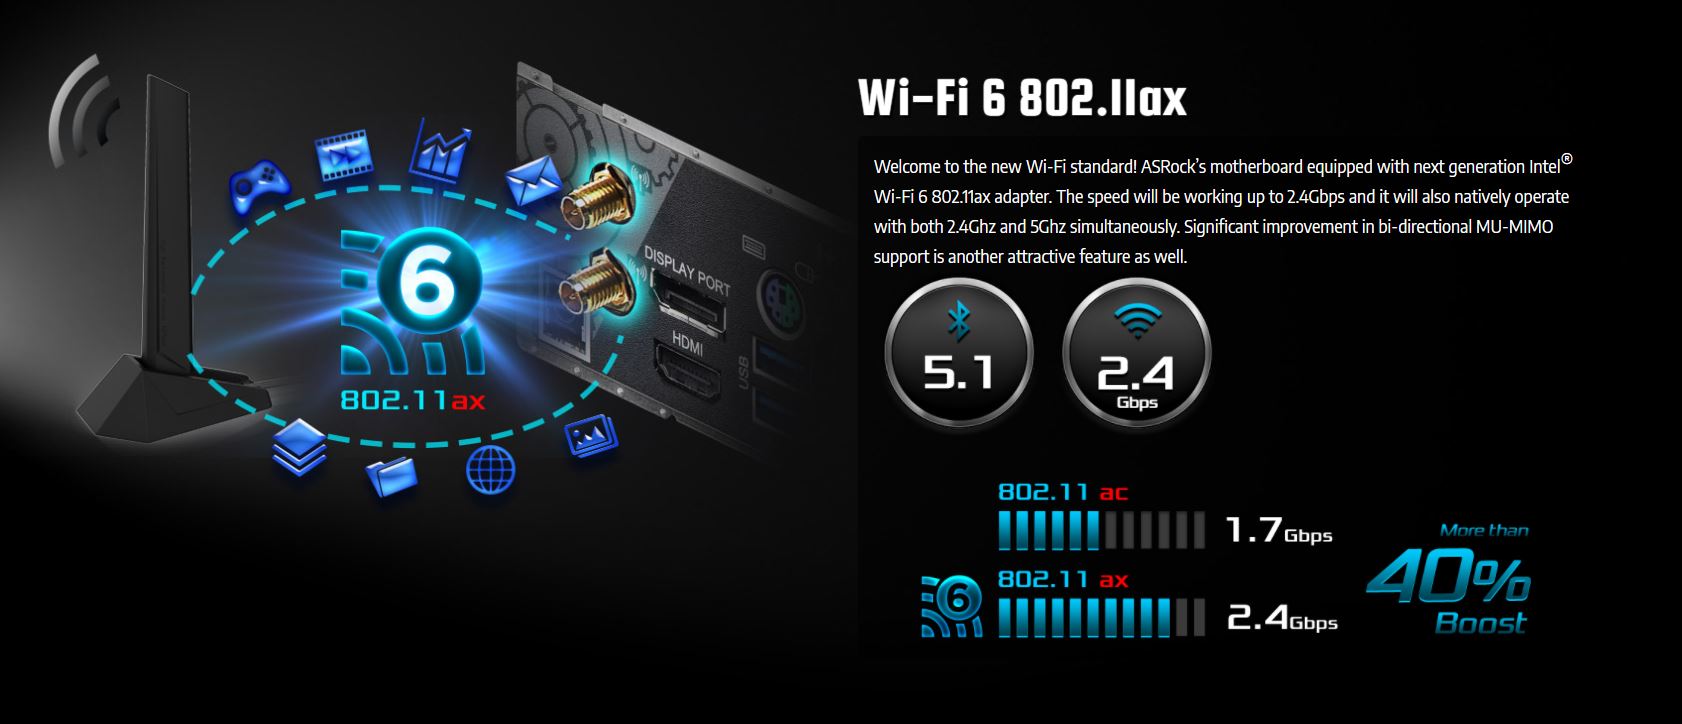 Chuẩn Wifi 6 802.11ax mới nhất